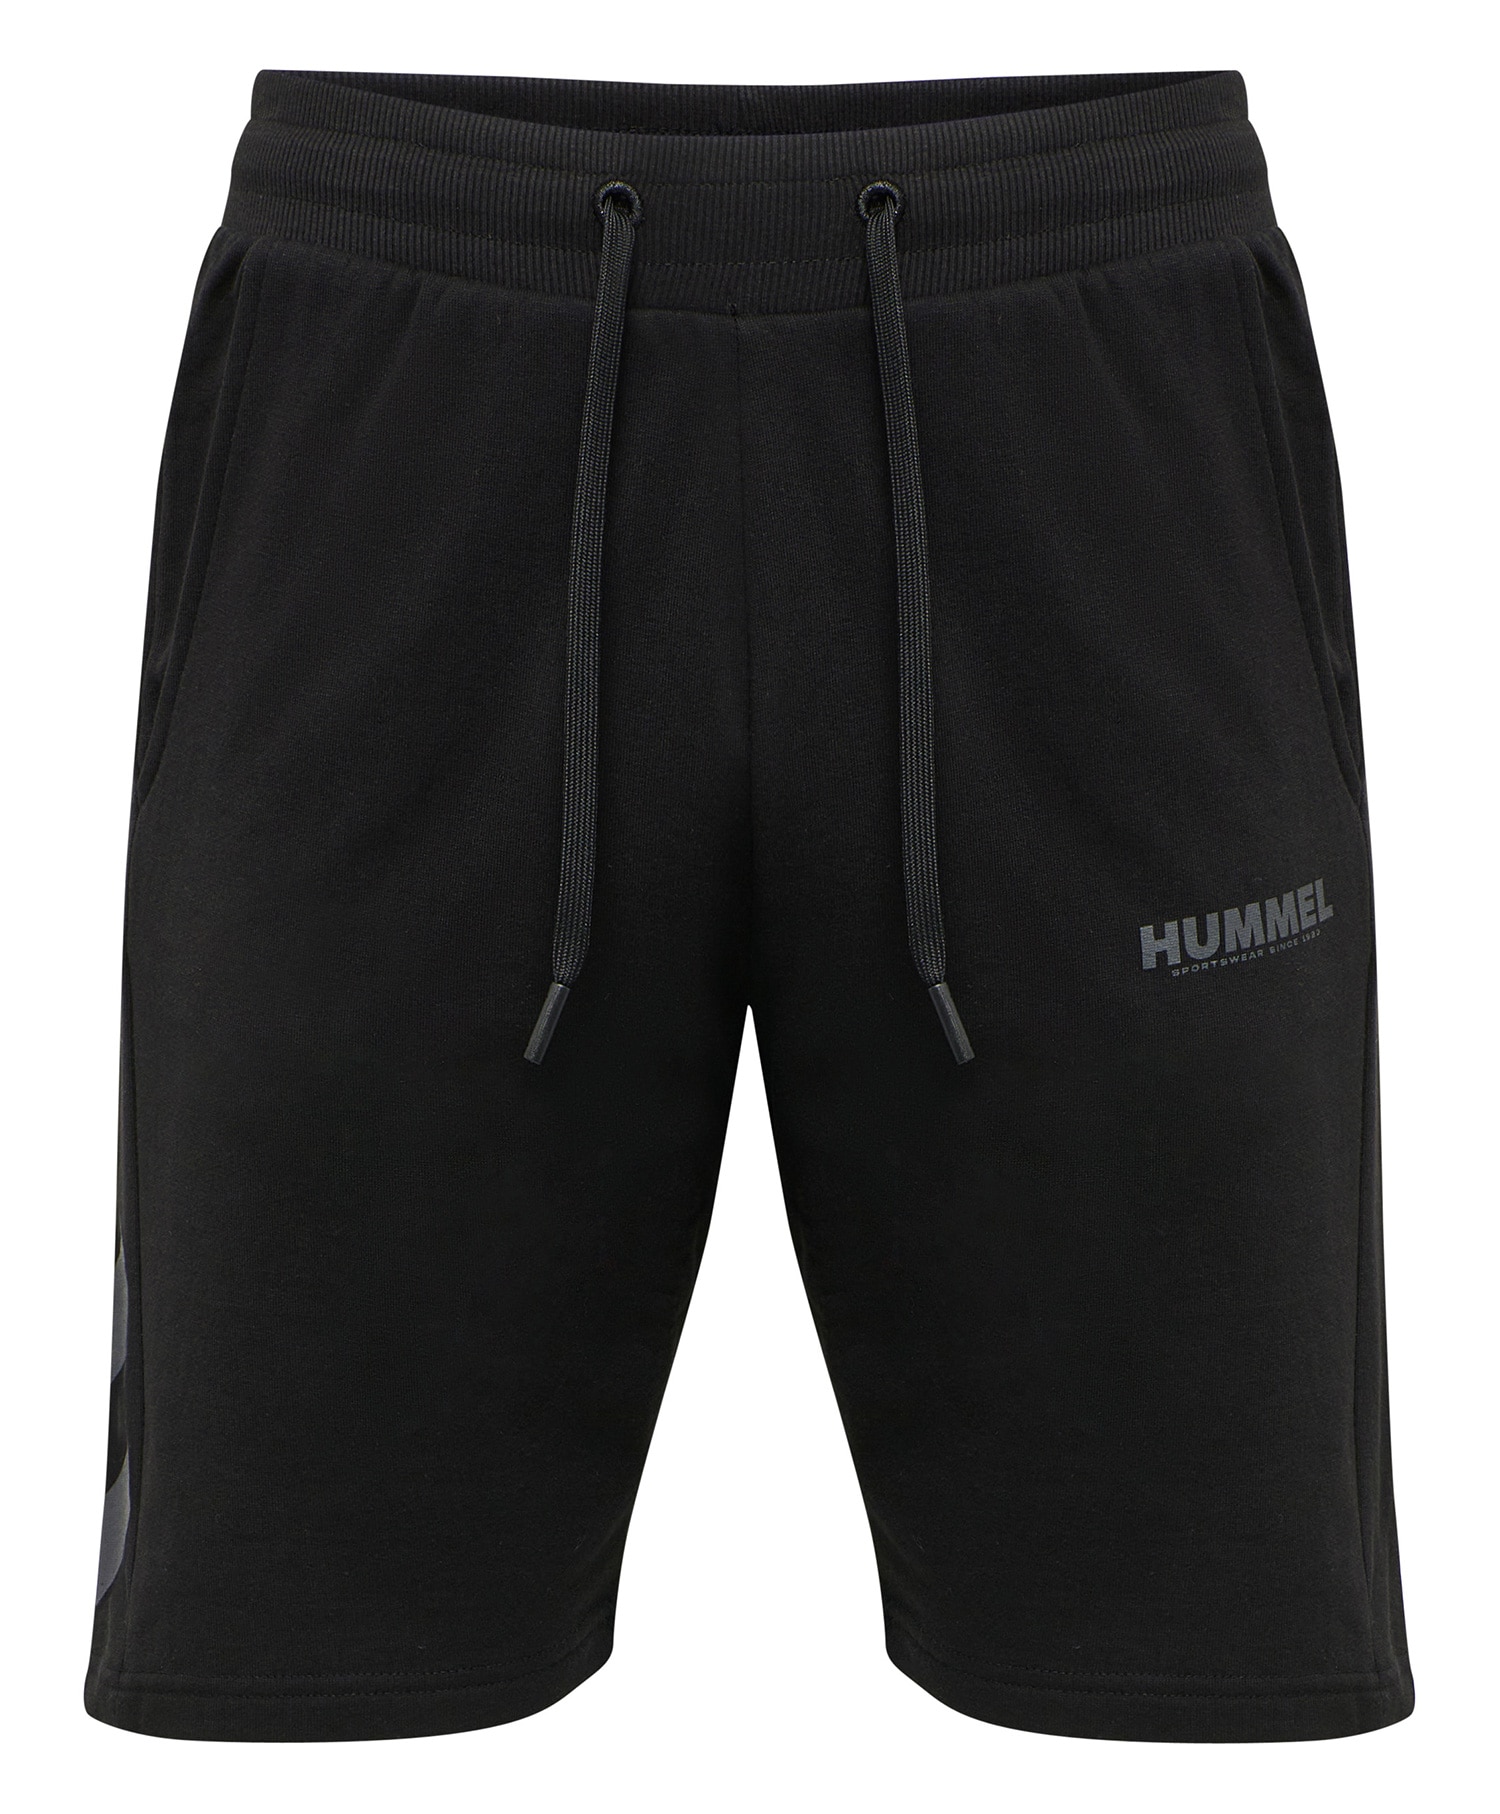 Hummel LEGACY Shorts